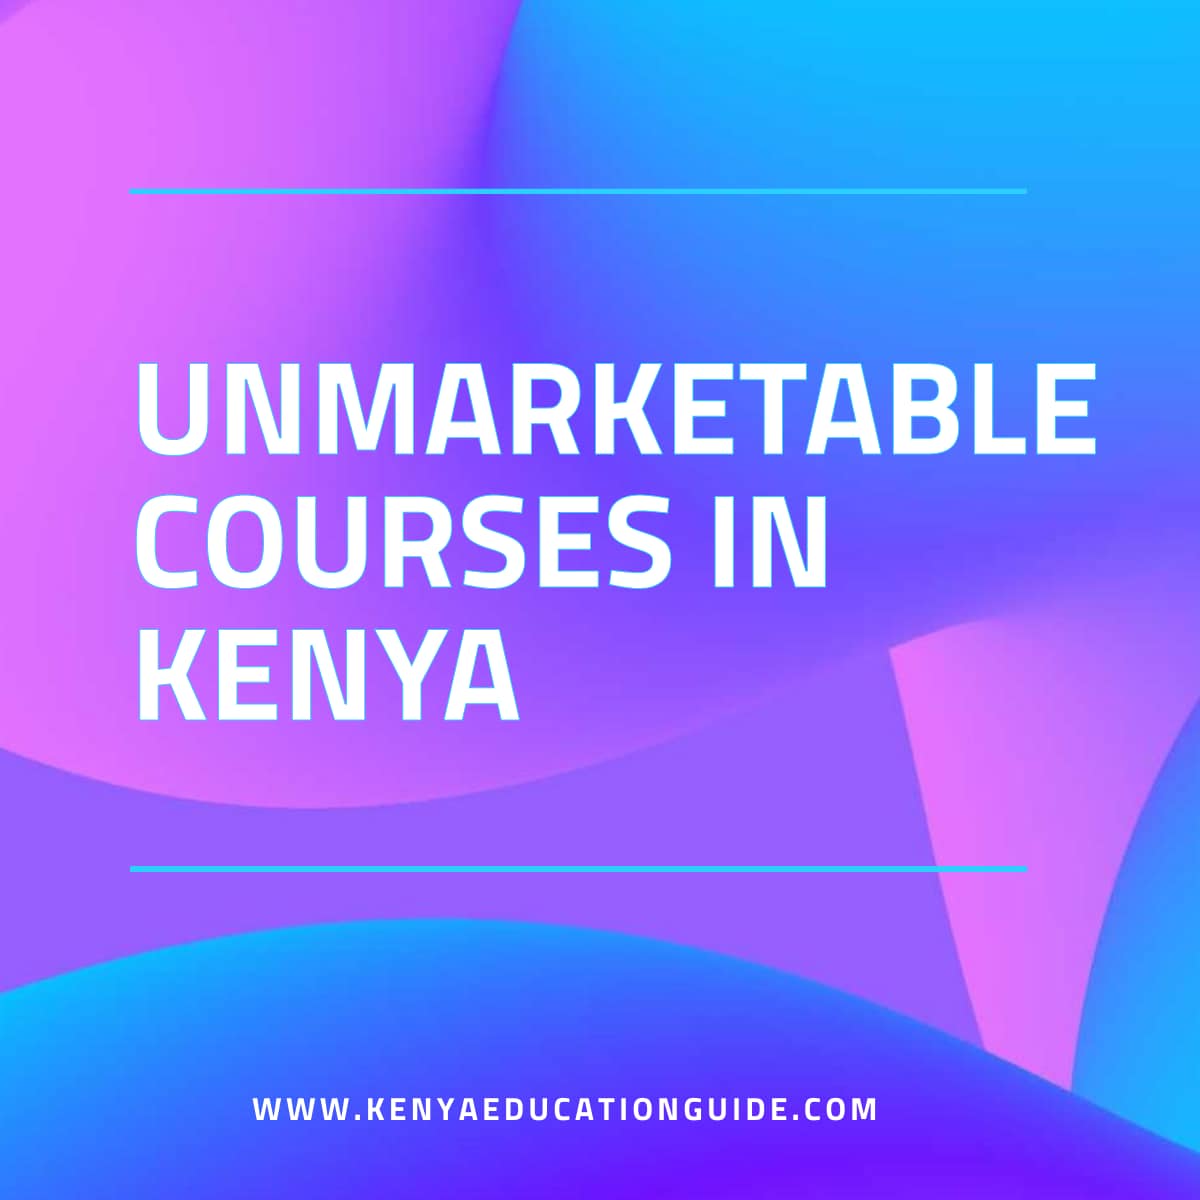 Unmarketable Courses in Kenya